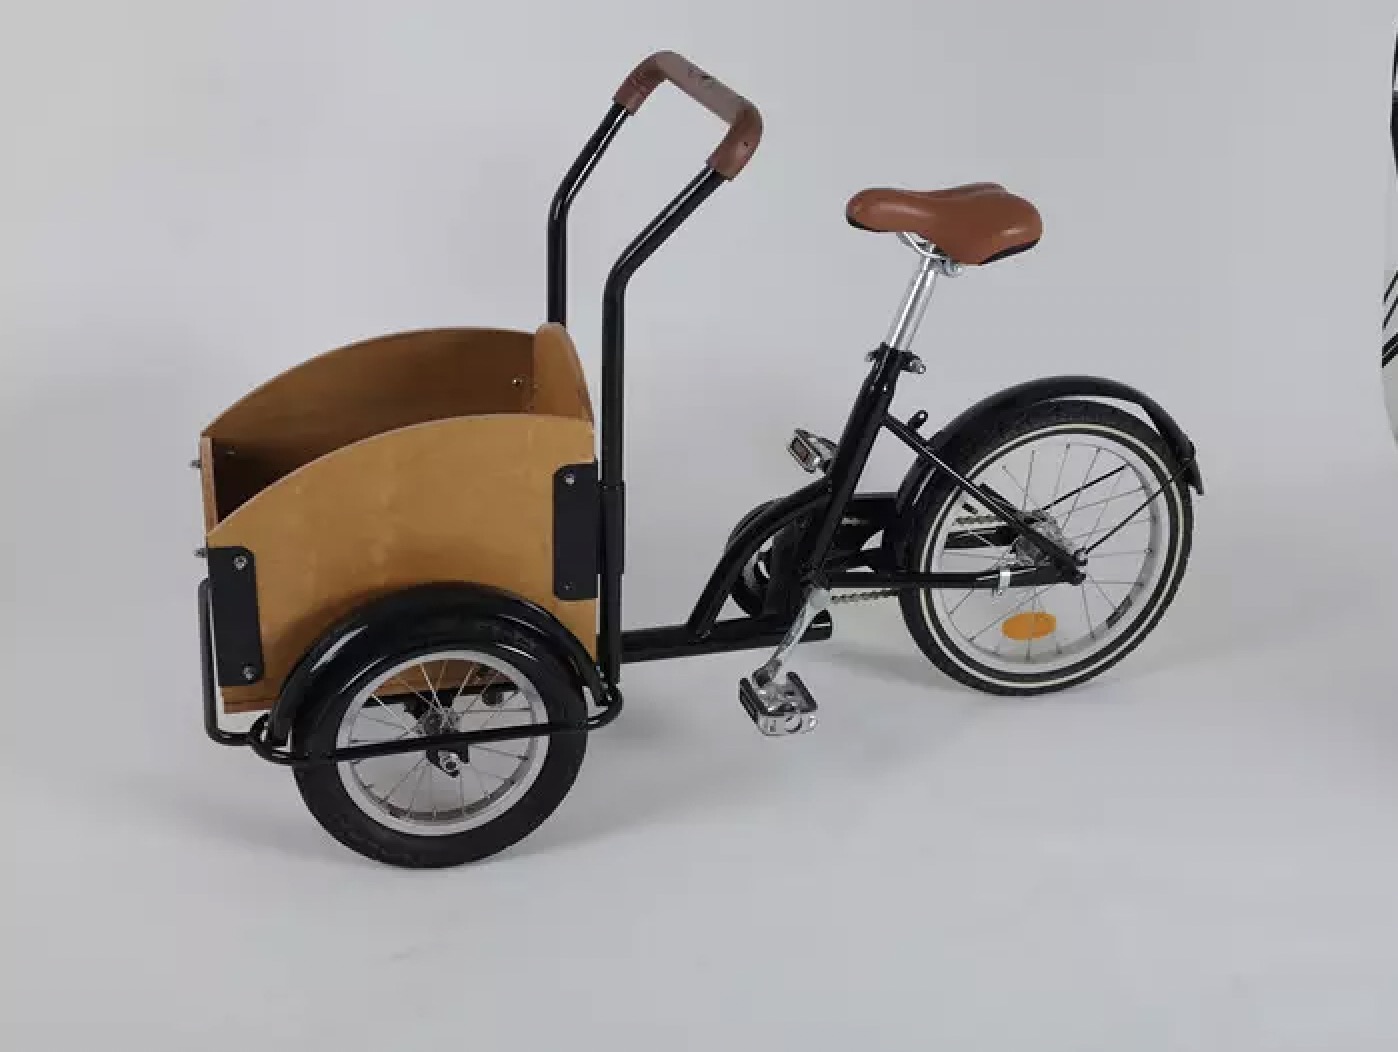 europe warehouse kids bike 3 wheel cargo bike for children toys trike balance bike